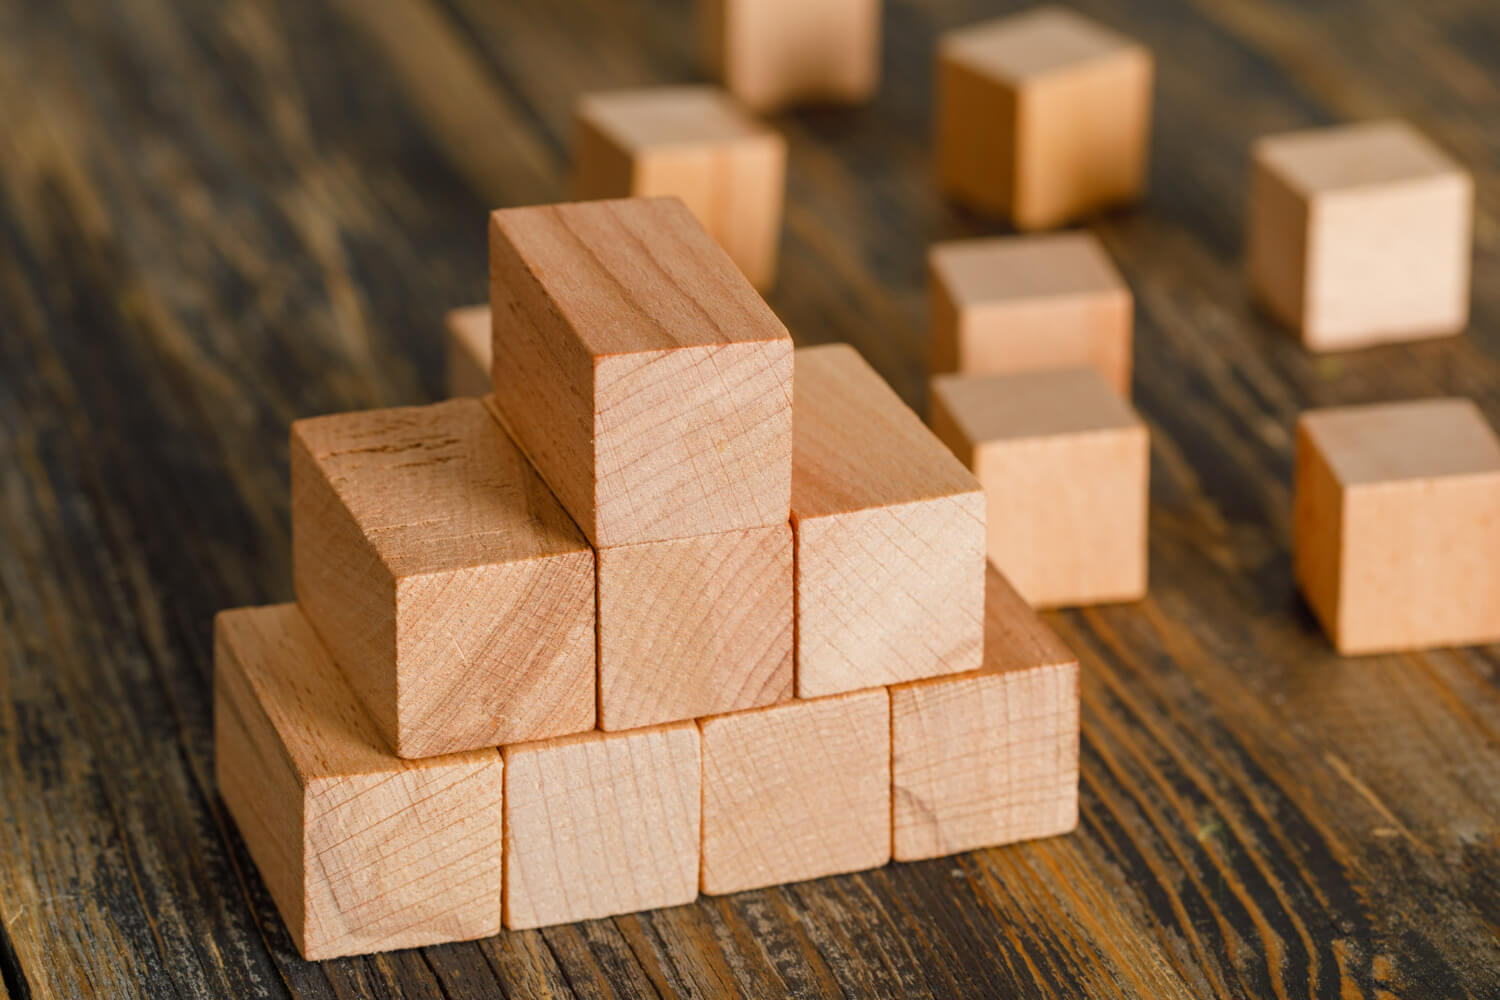 Stacked blocks symbolizing company structure